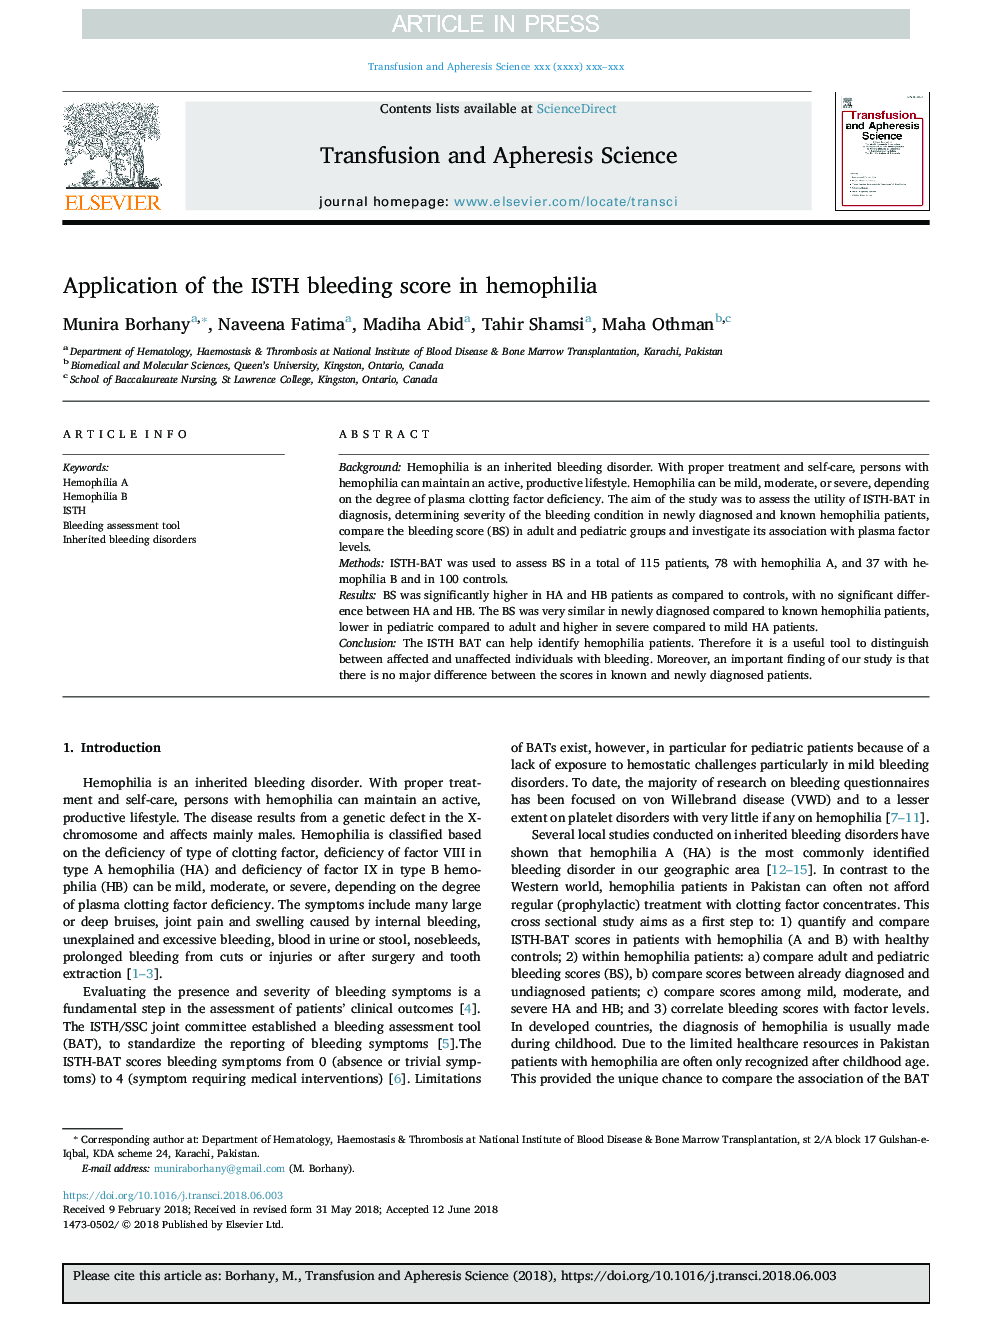 Application of the ISTH bleeding score in hemophilia